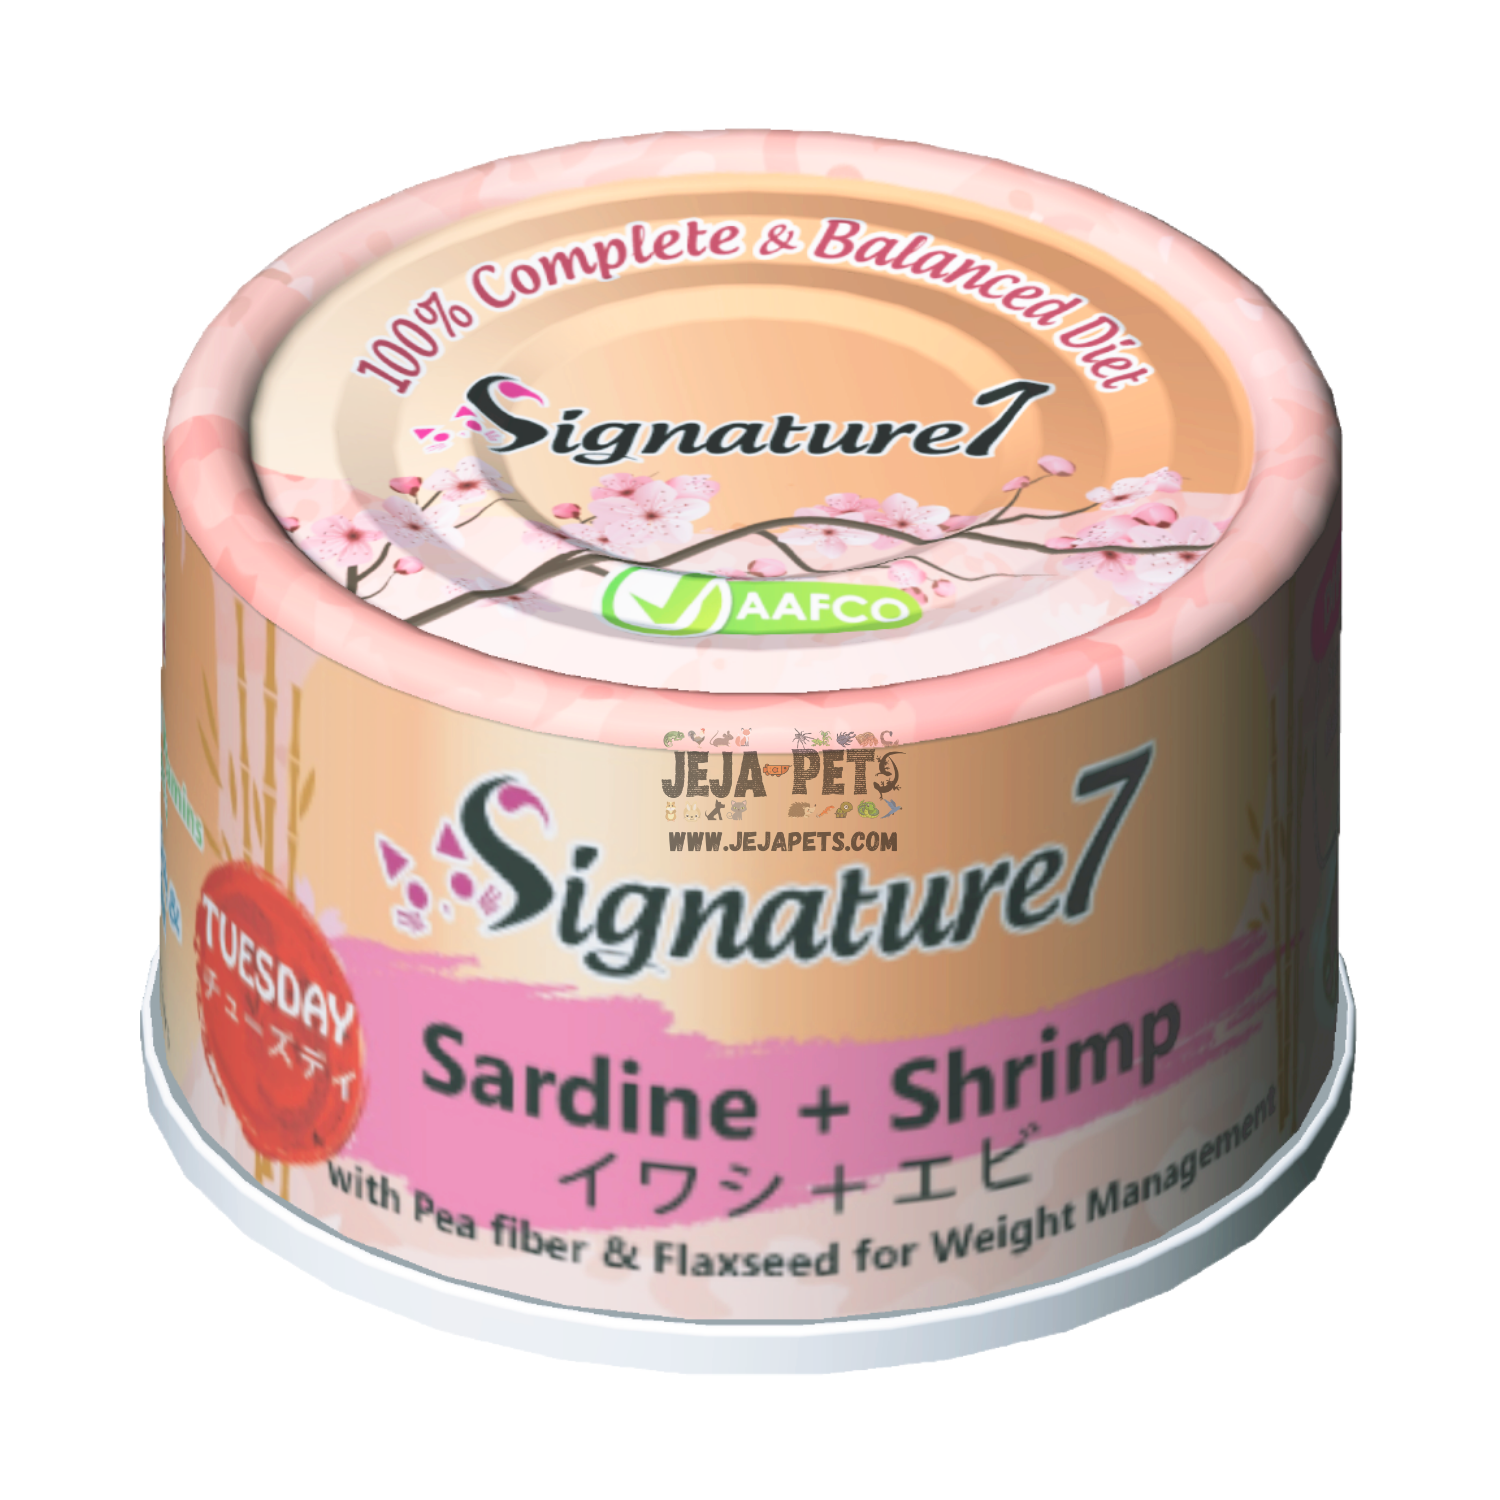 Signature7 Tuesday Sardine & Shrimp Cat Canned Food - 70g